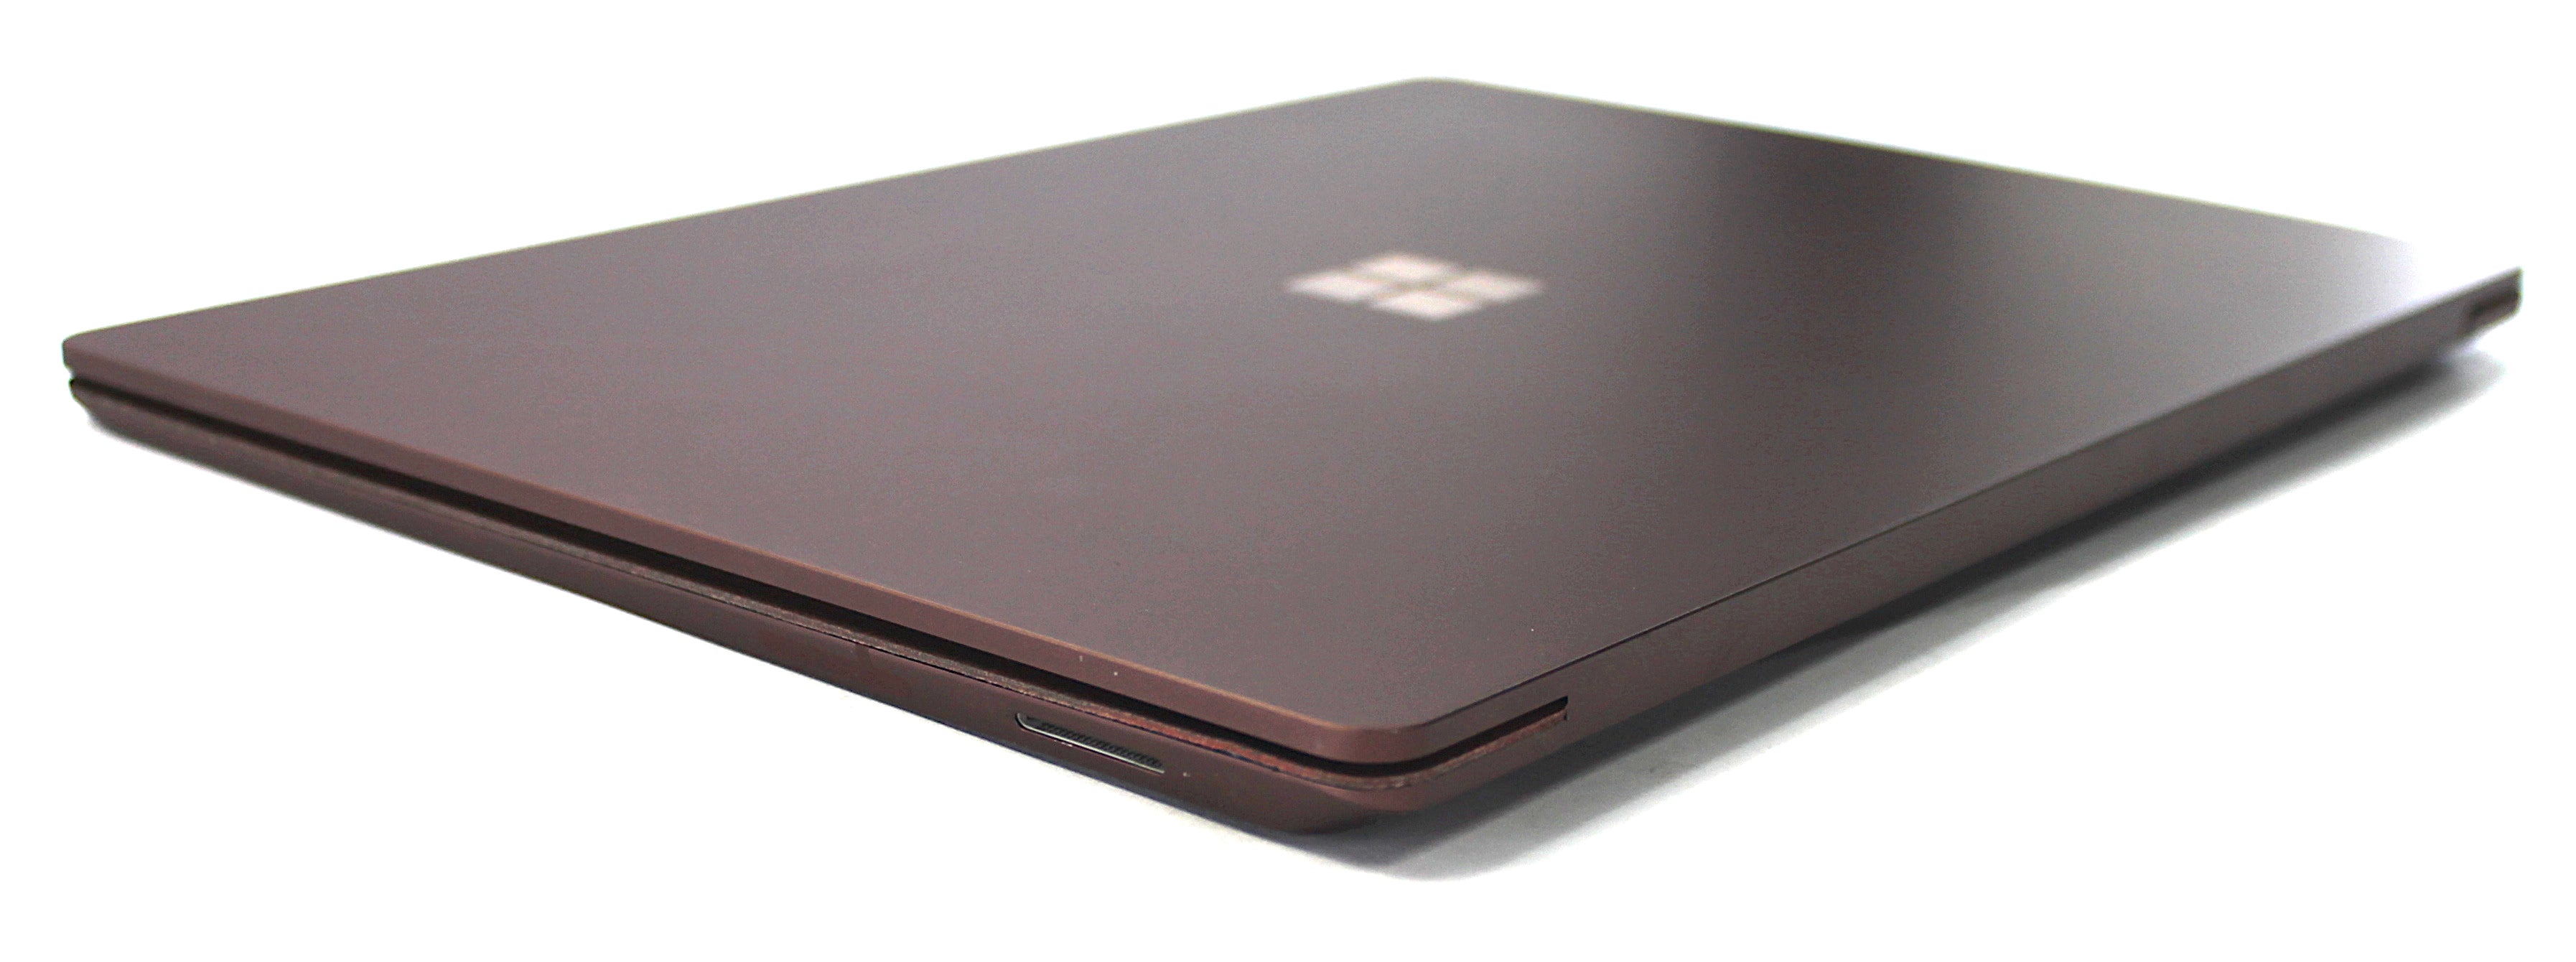 Microsoft Surface Laptop 2, 13" Core i5 7th Gen, 8GB RAM, 256GB eMMC